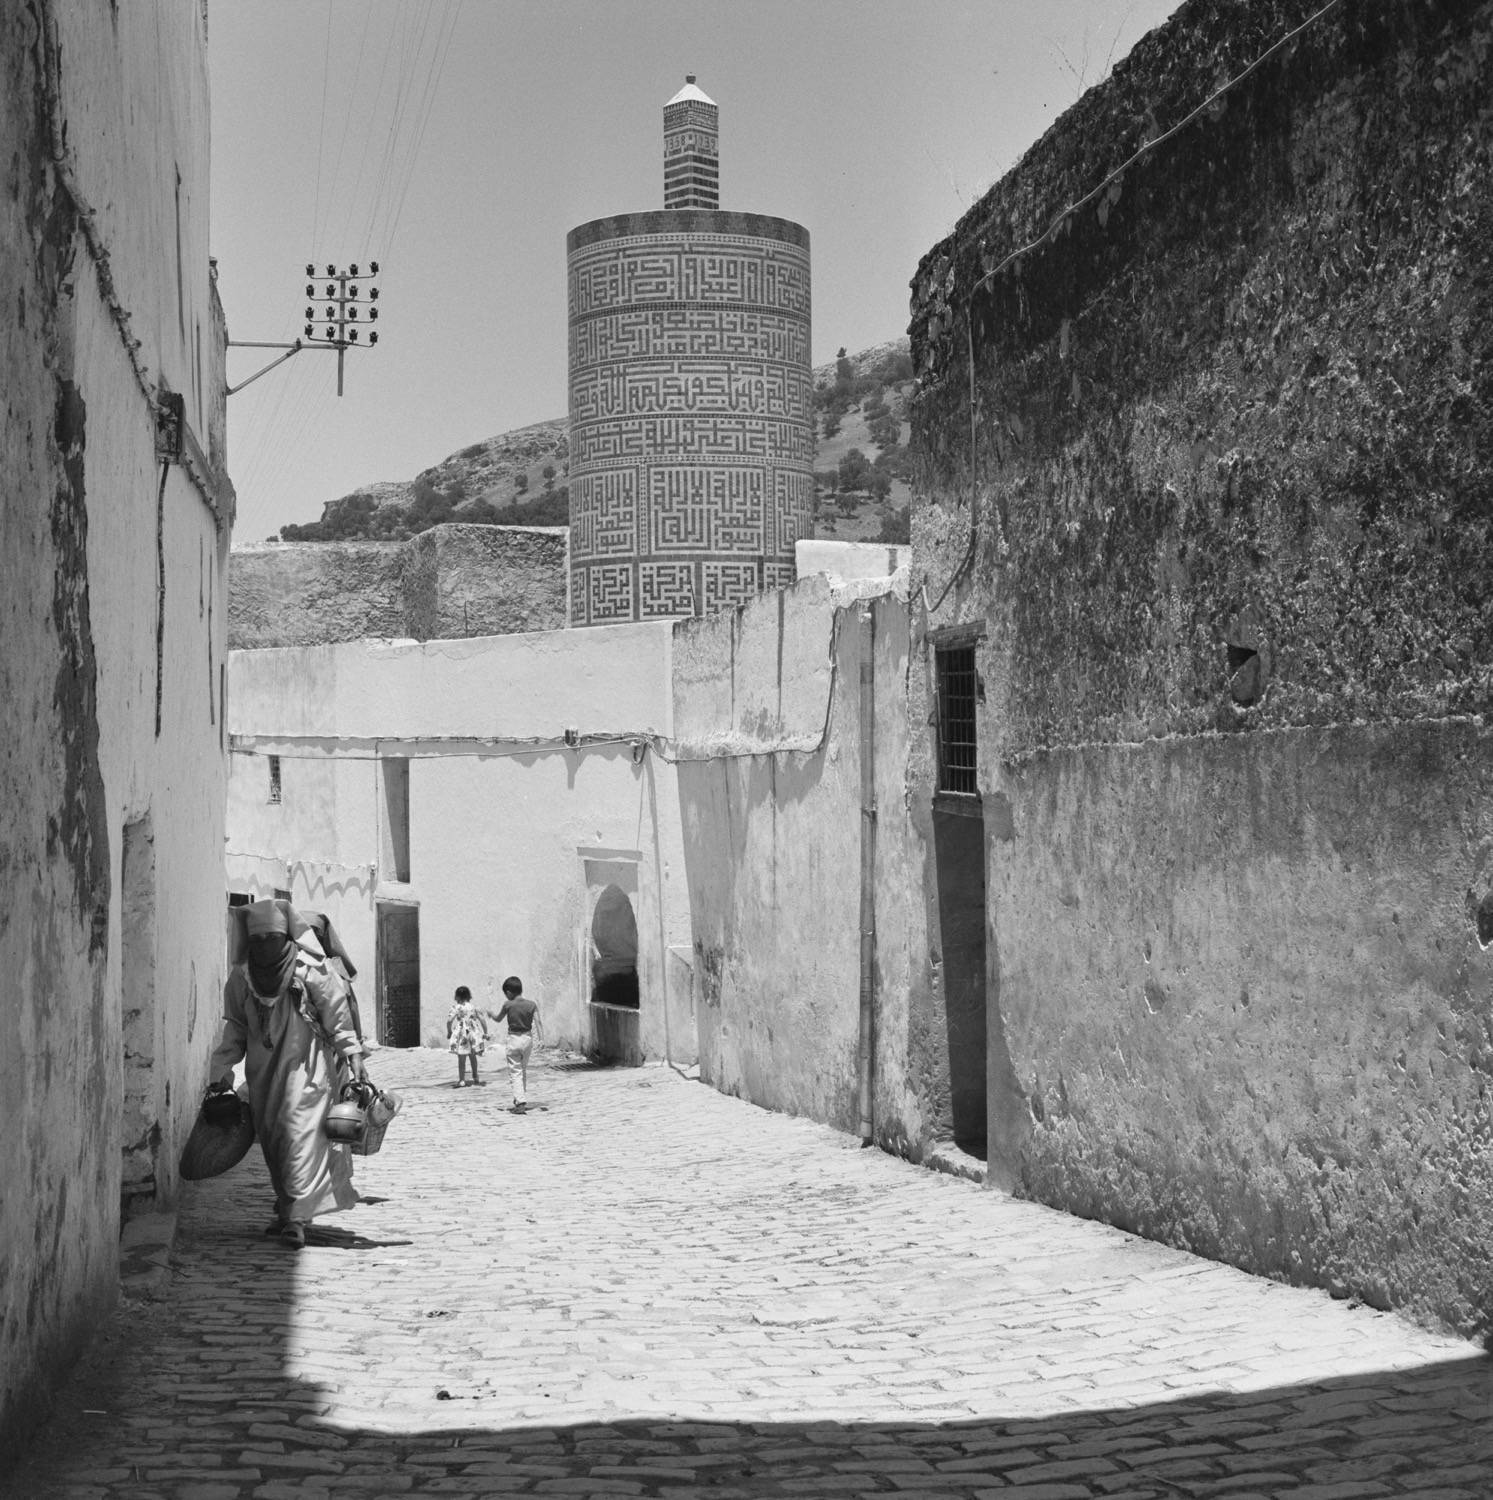 View down the street toward the circular minaret